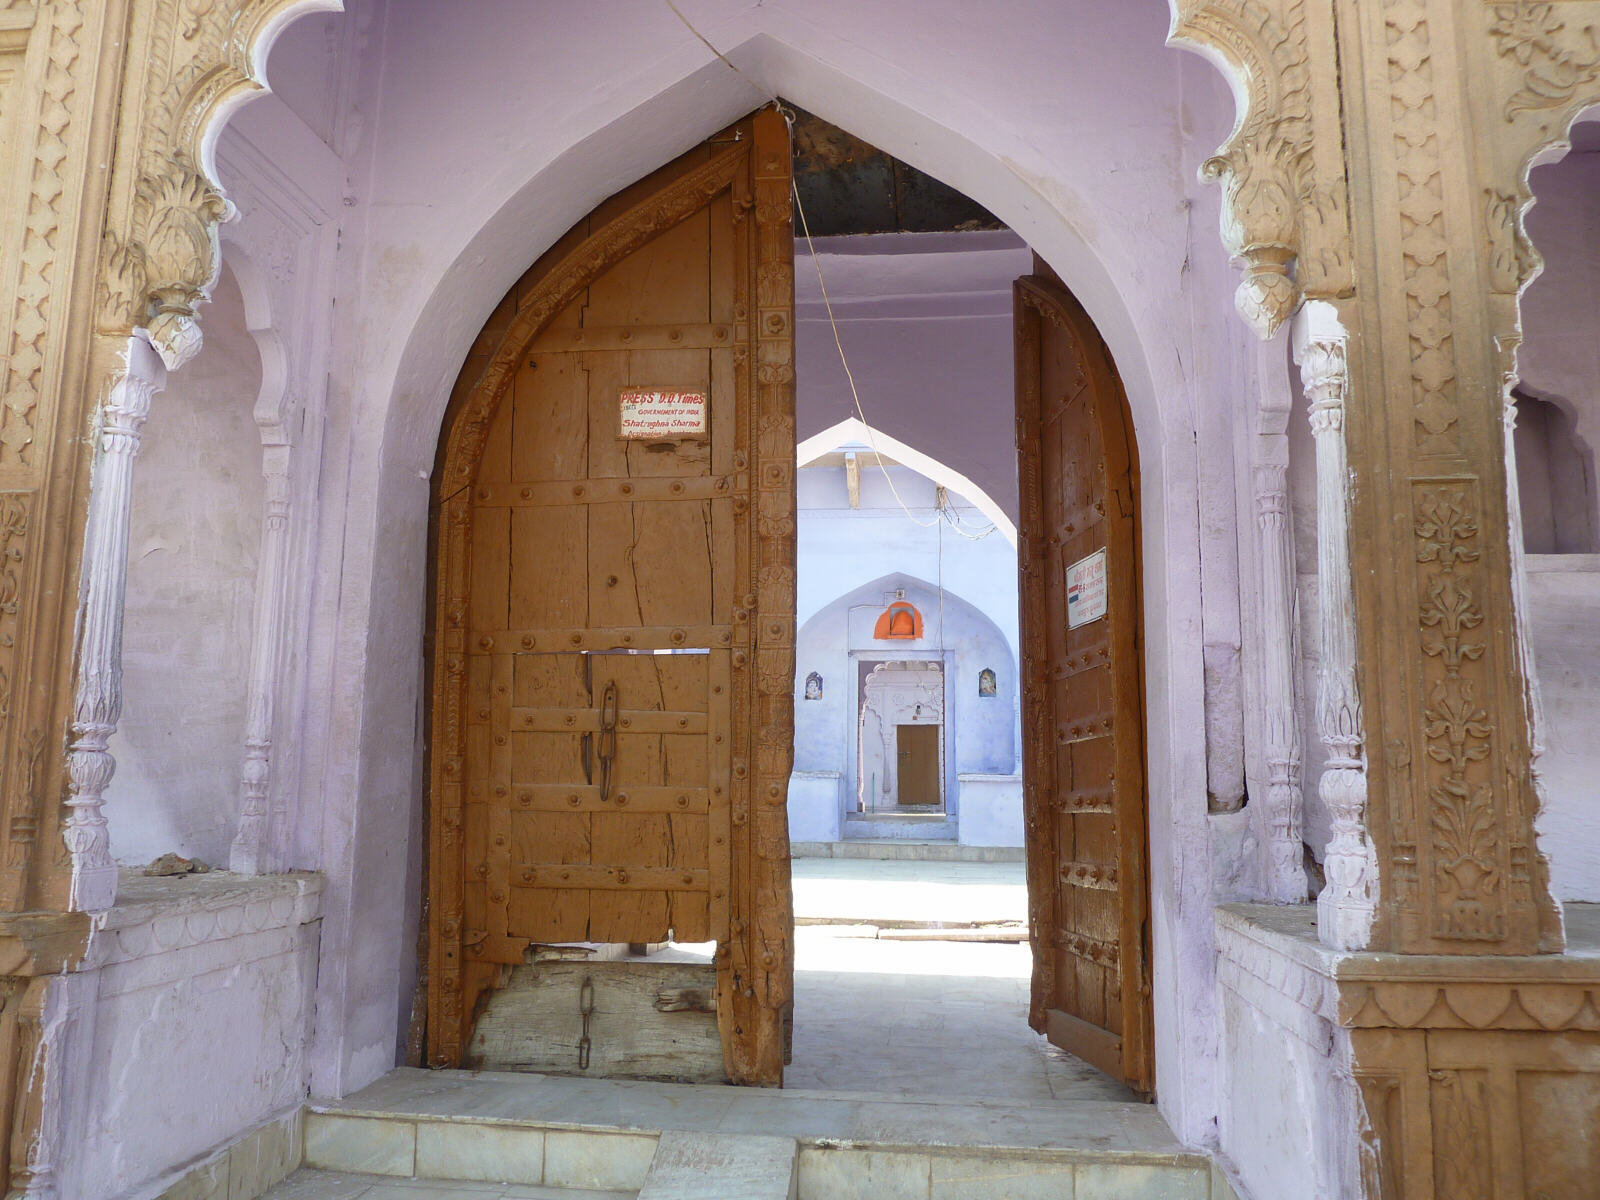 A doorway in Vrindavan, Uttar Pradesh, India